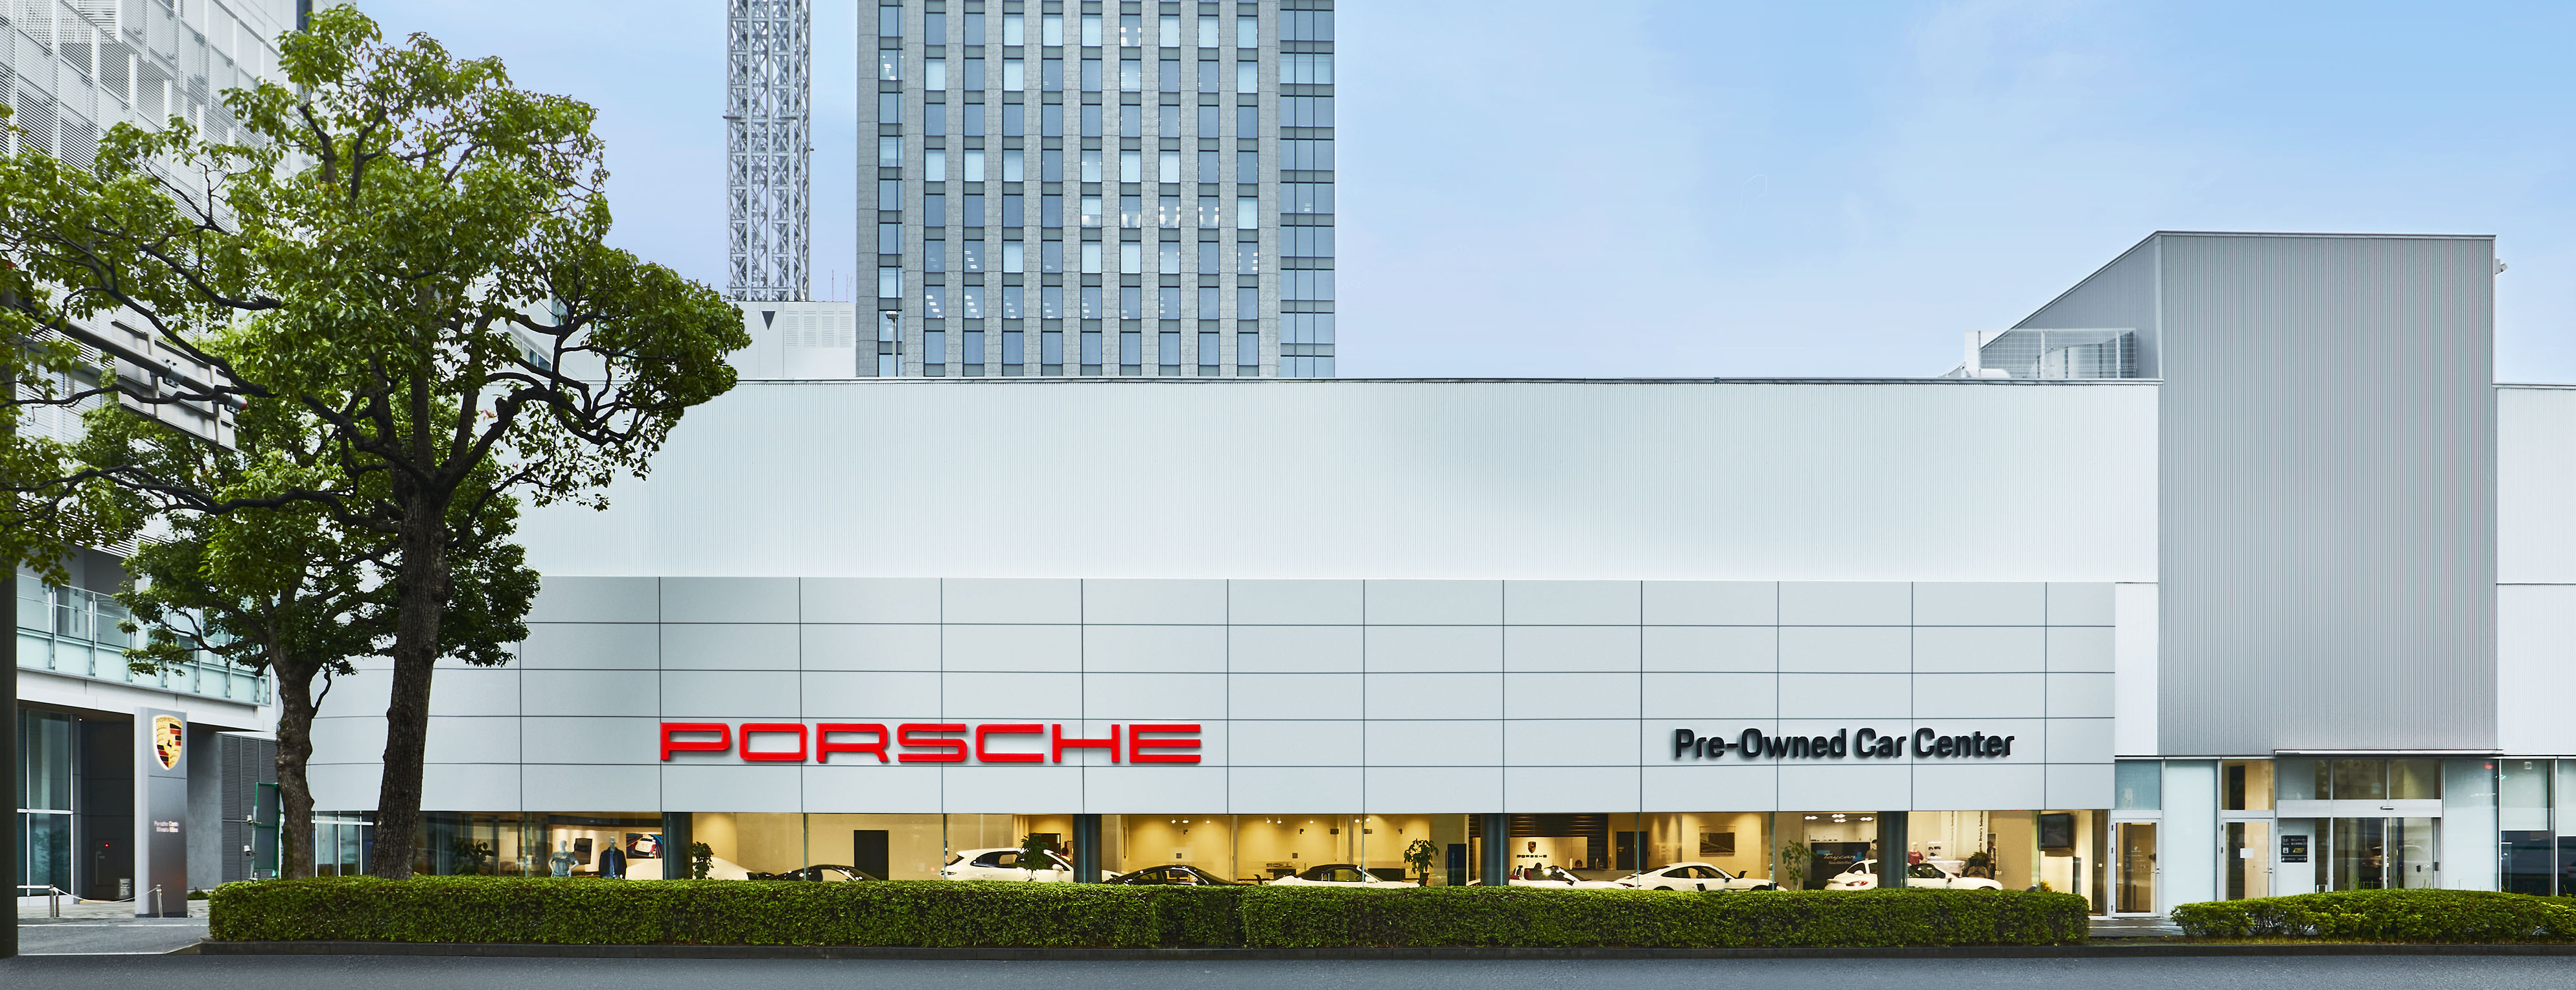 Porsche Pre-Owned Car Center Minatomirai.